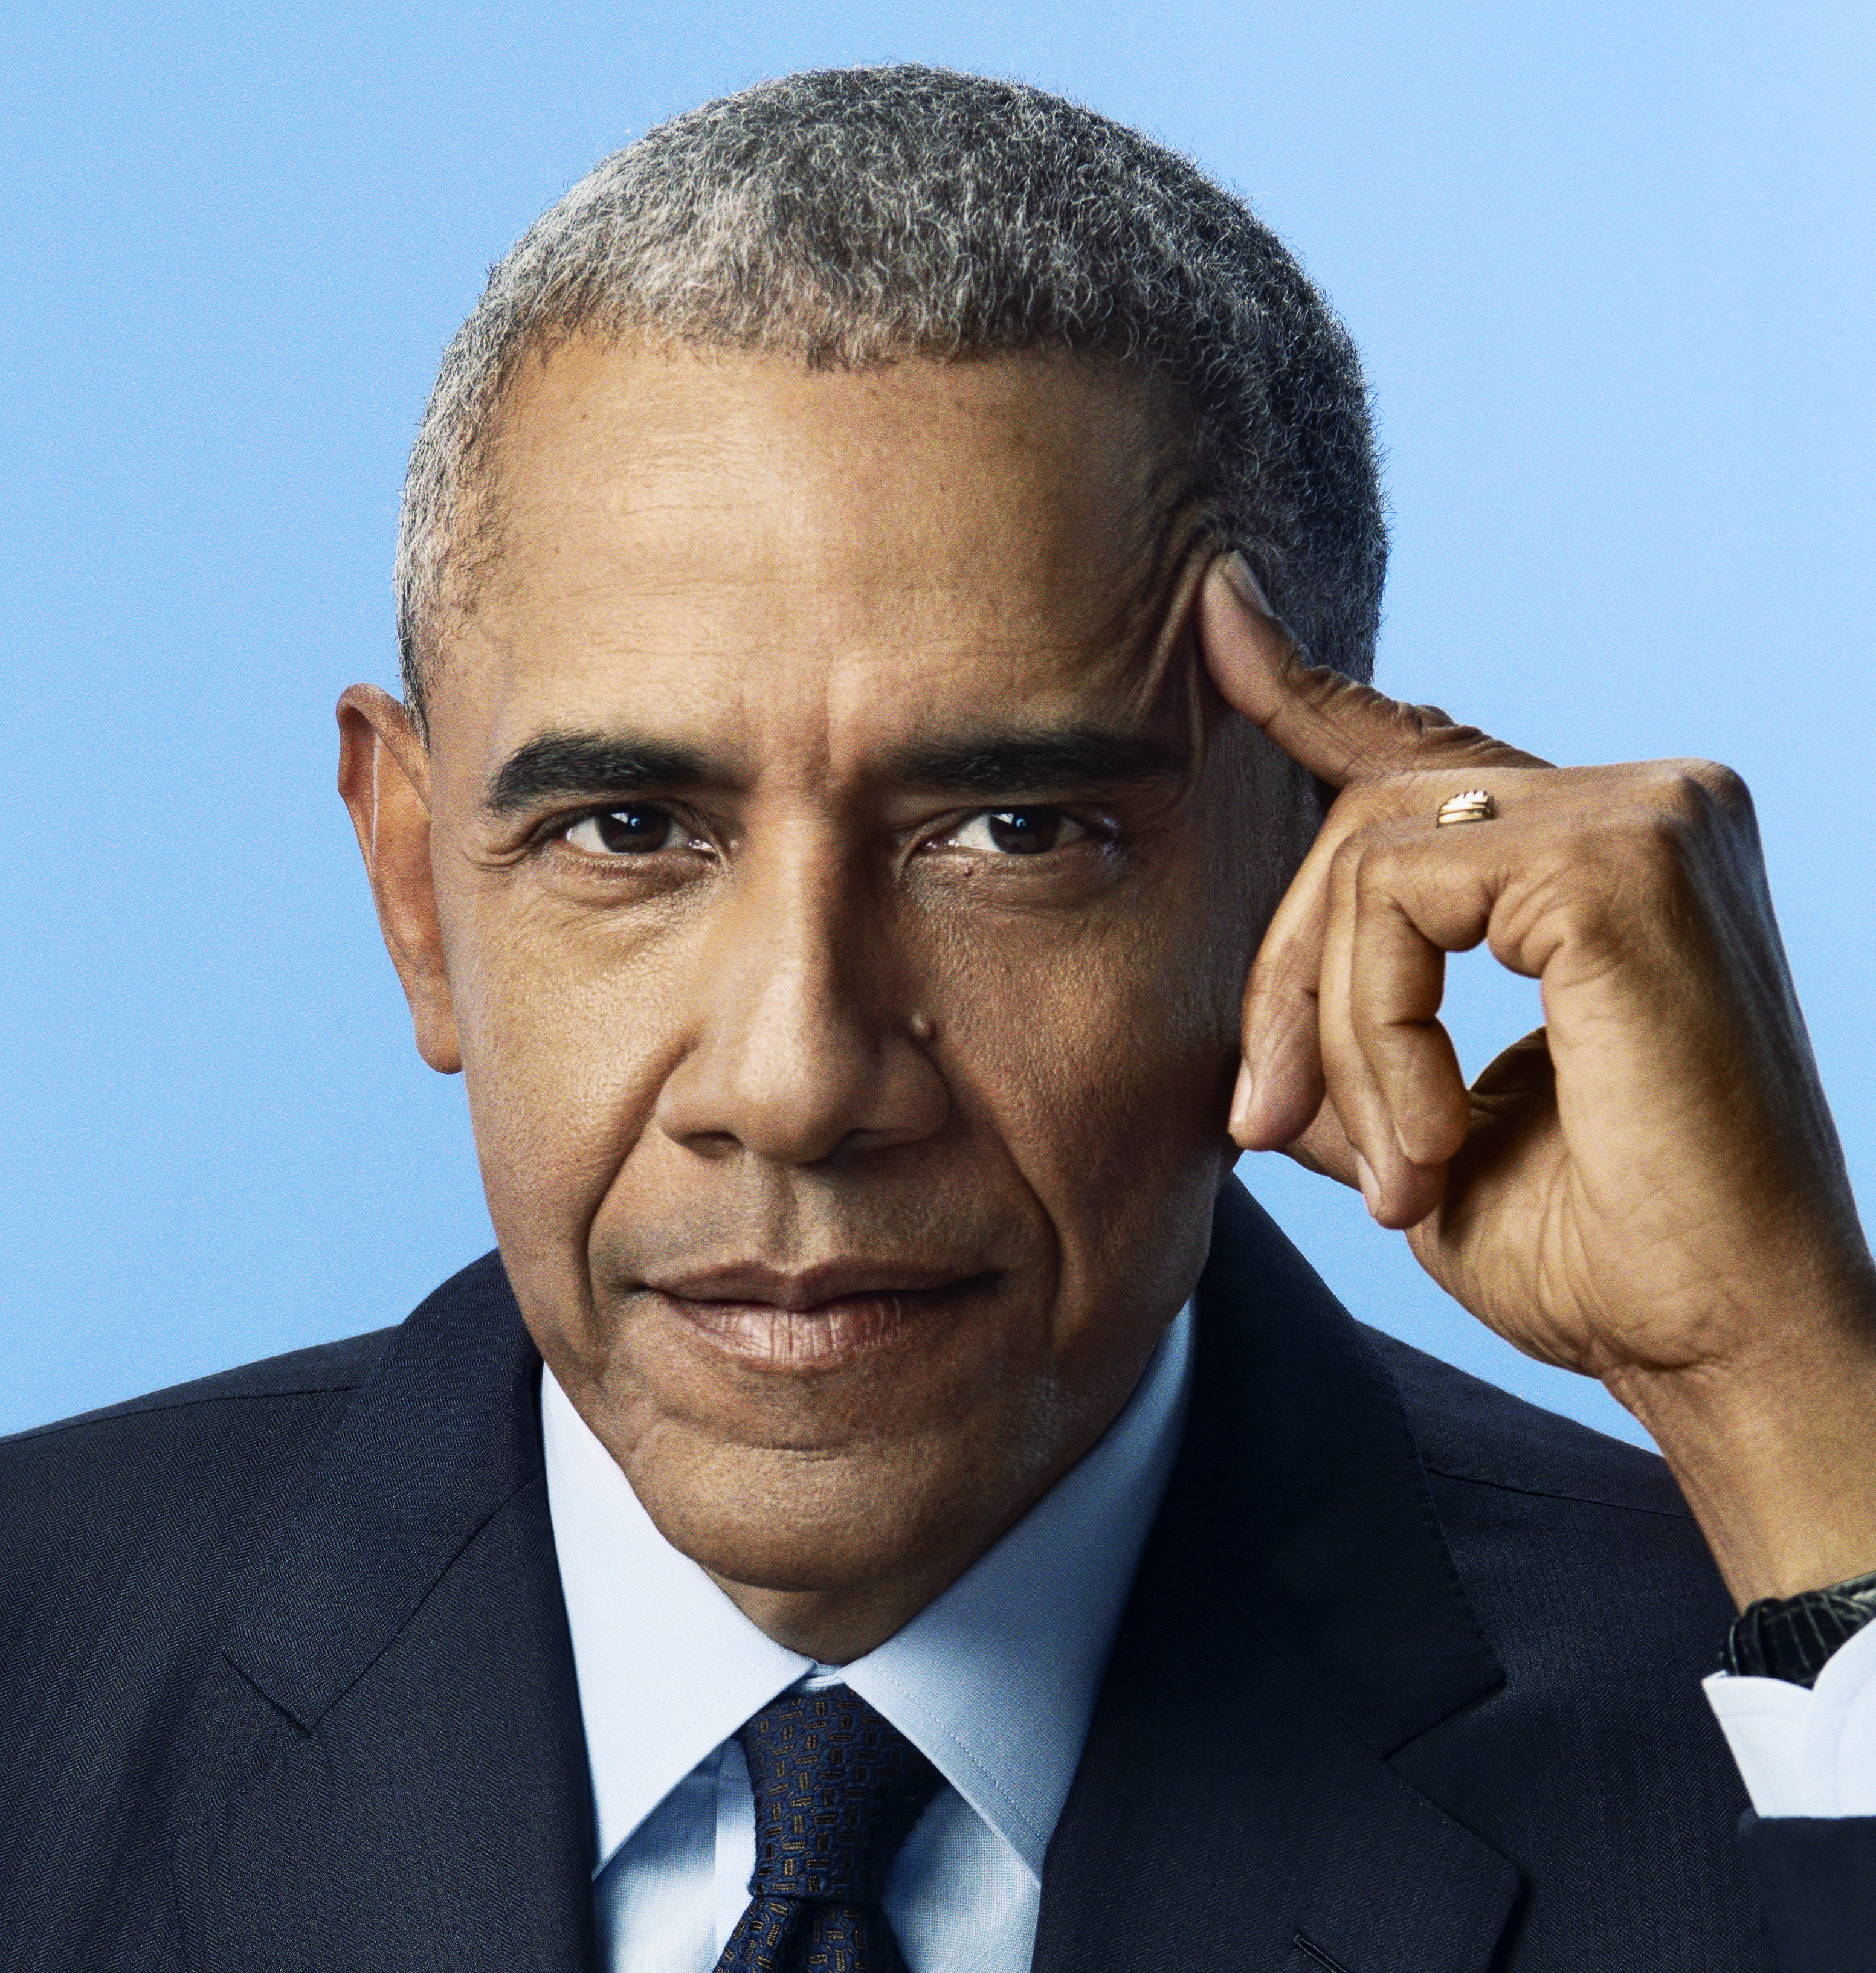 President Obama Headshot (Economic Inclusion) (Photo by Pari Dukovic courtesy of Penguin Random House)